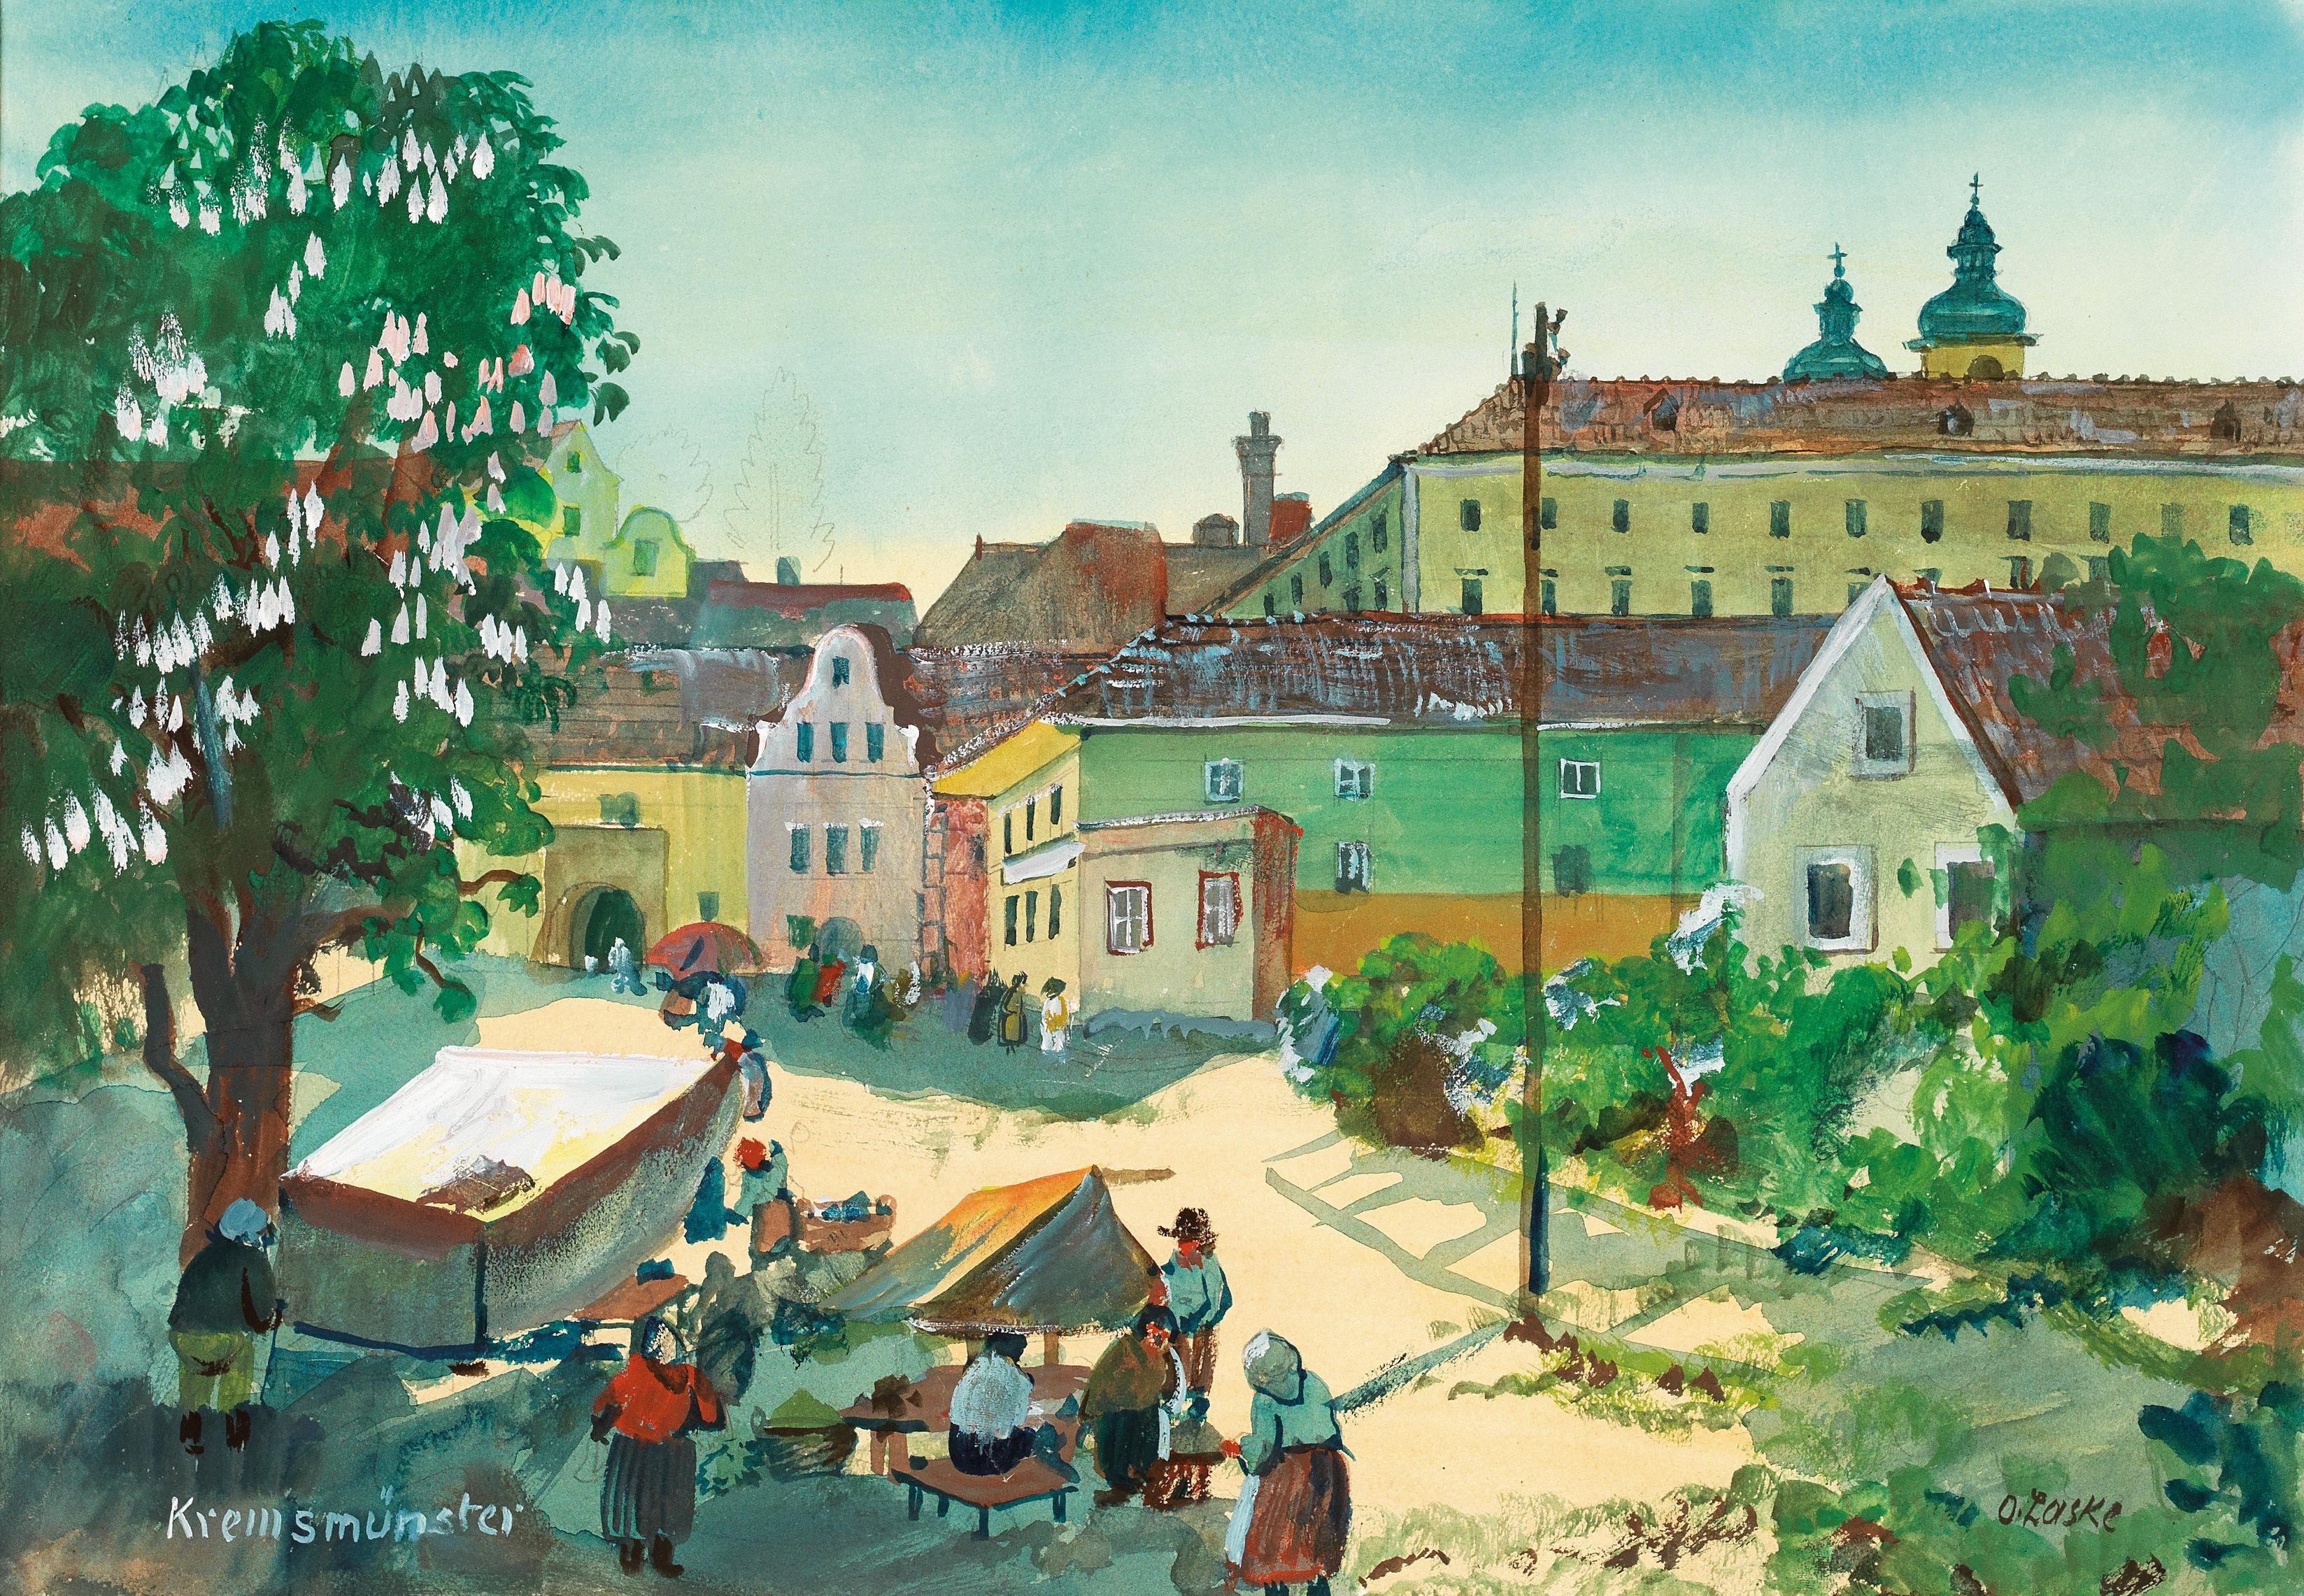 Artwork by Oskar Laske, “Kremsmünster”, Made of gouache, watercolour on paper